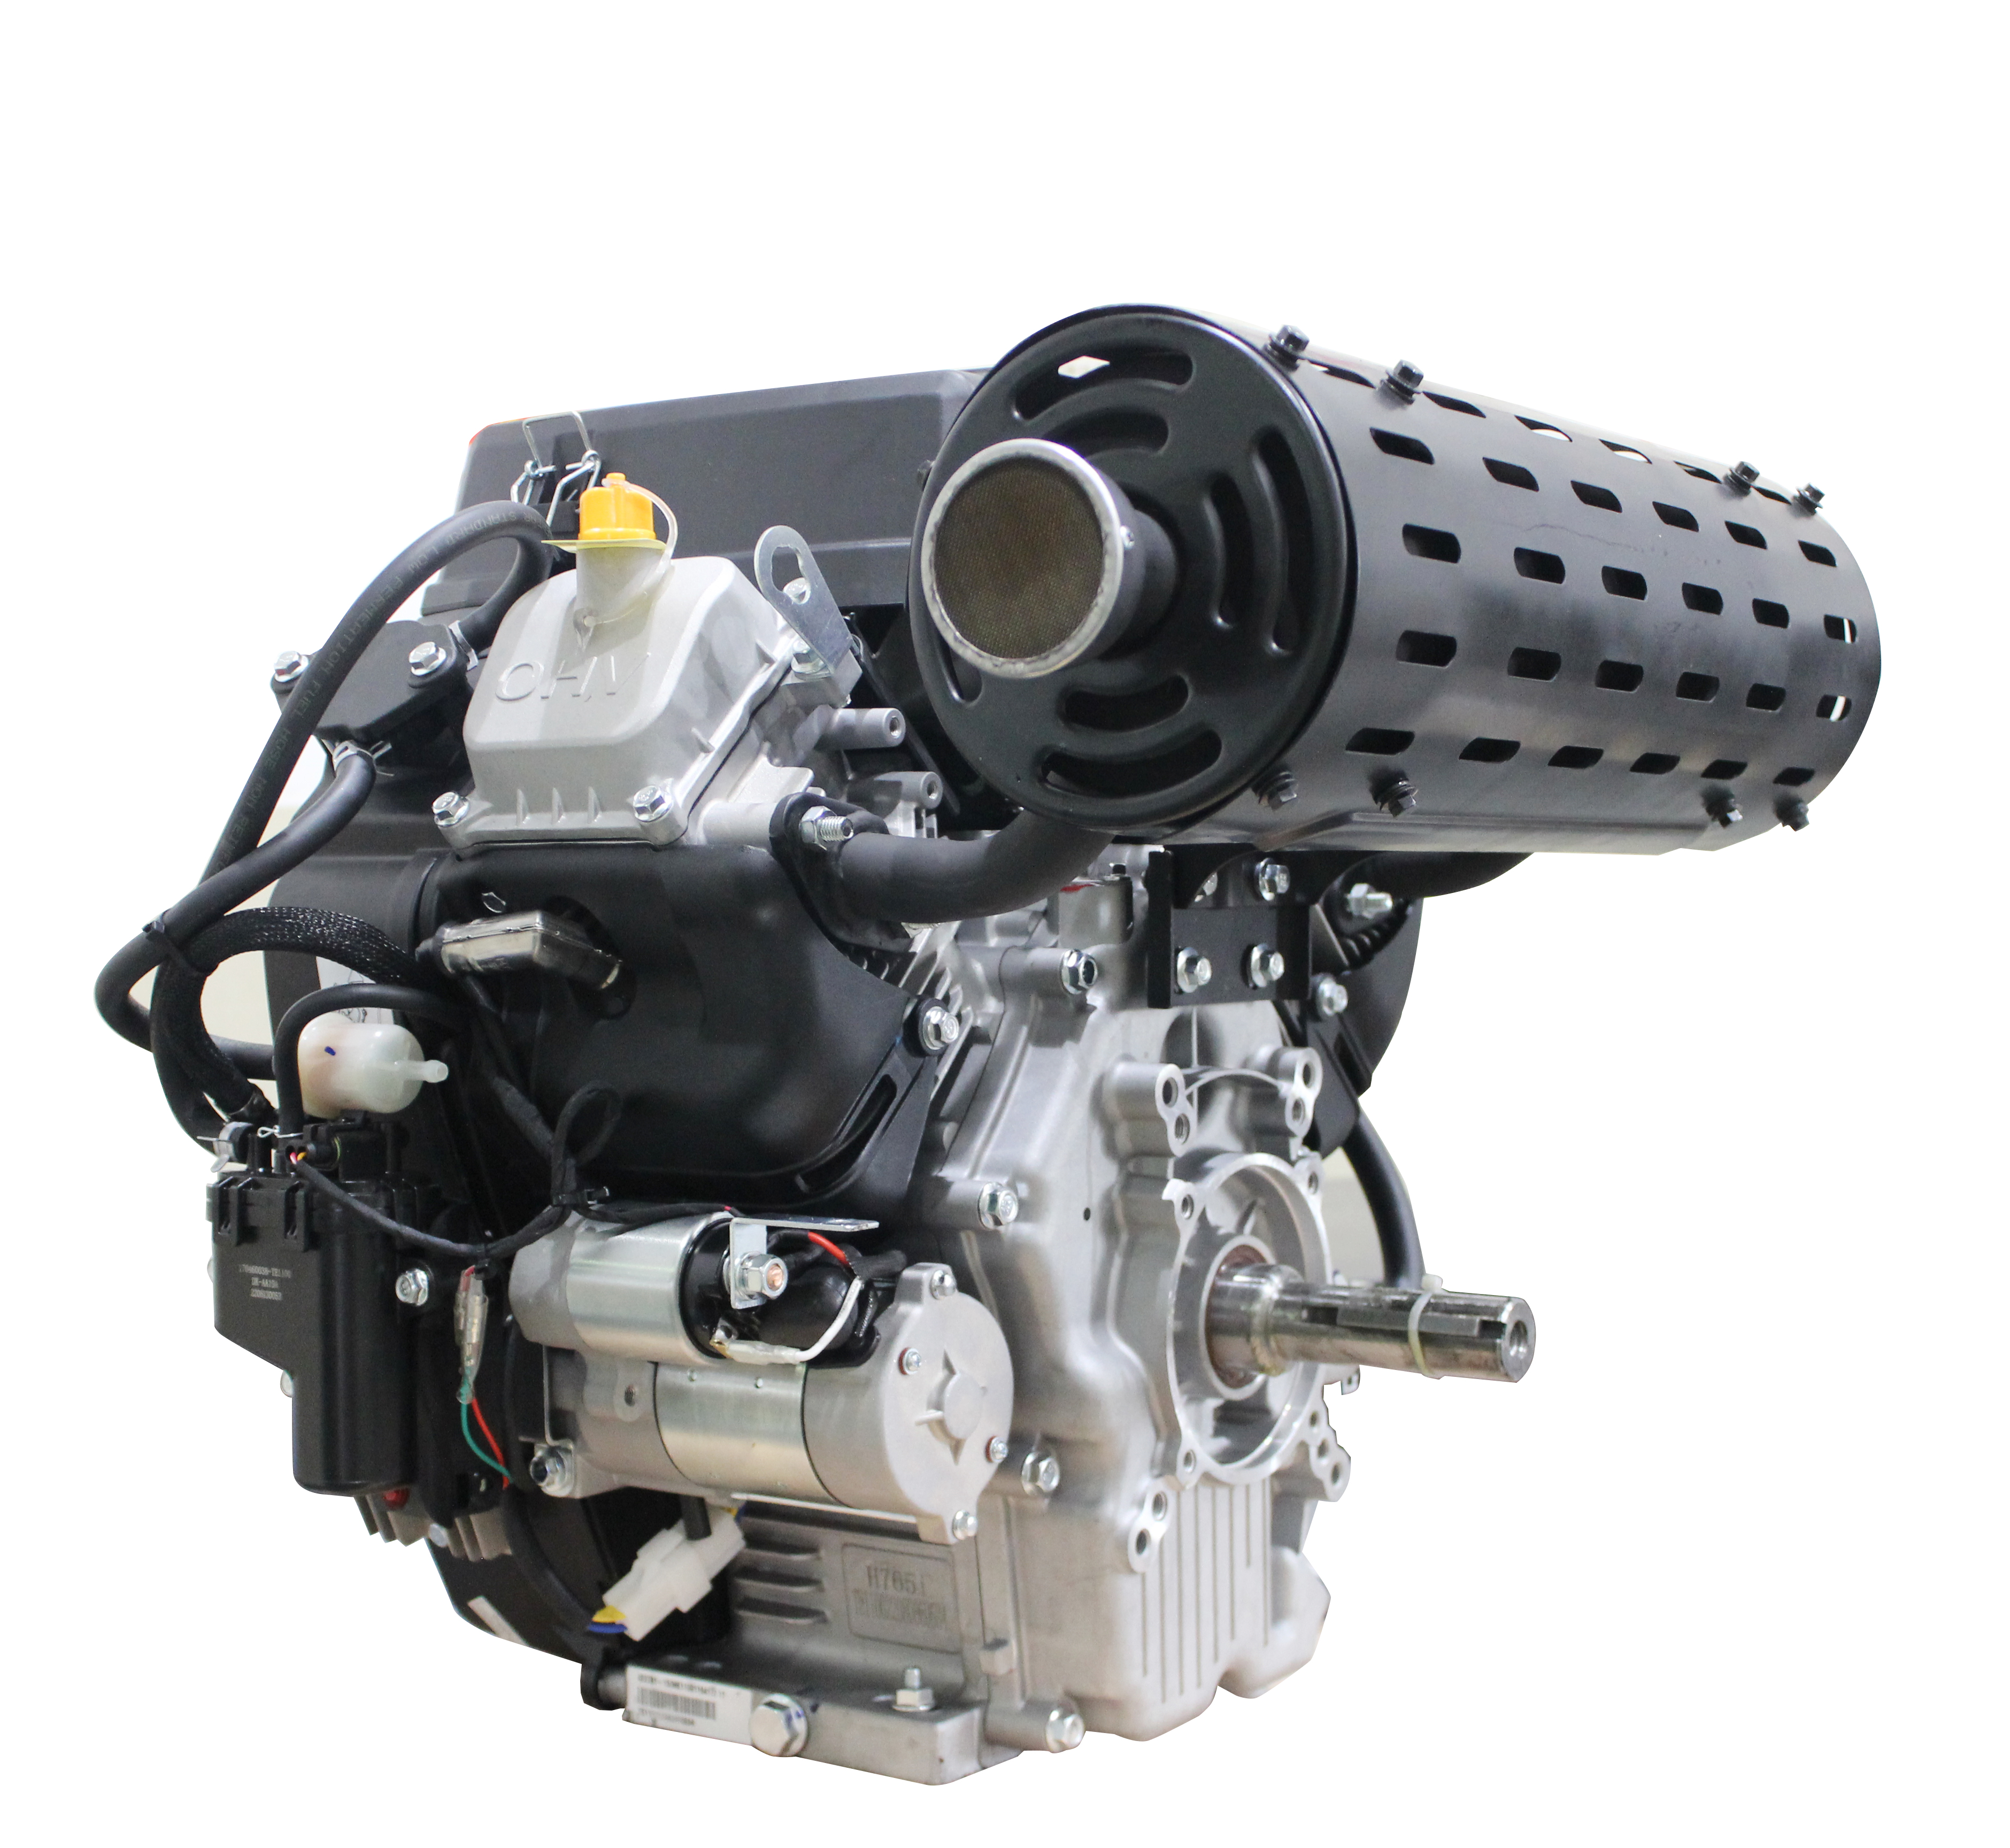 Fullas H765i 27HP 764CC Gasoline V Twin Engine EPA/EURO-V